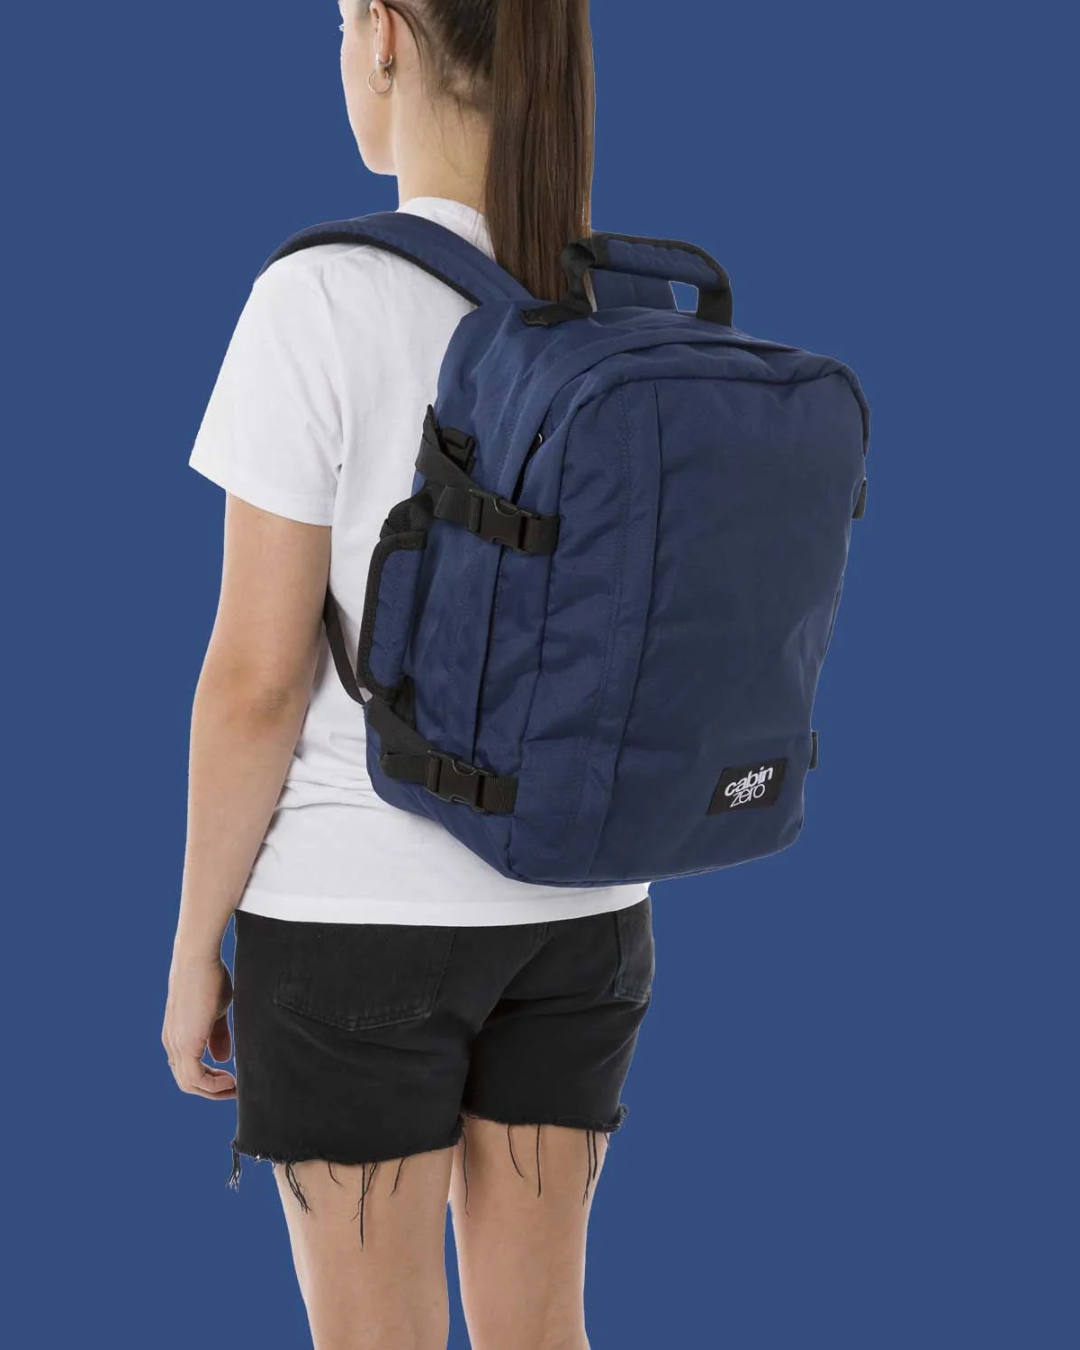 Cabin Zero Classic backpack CZ081205